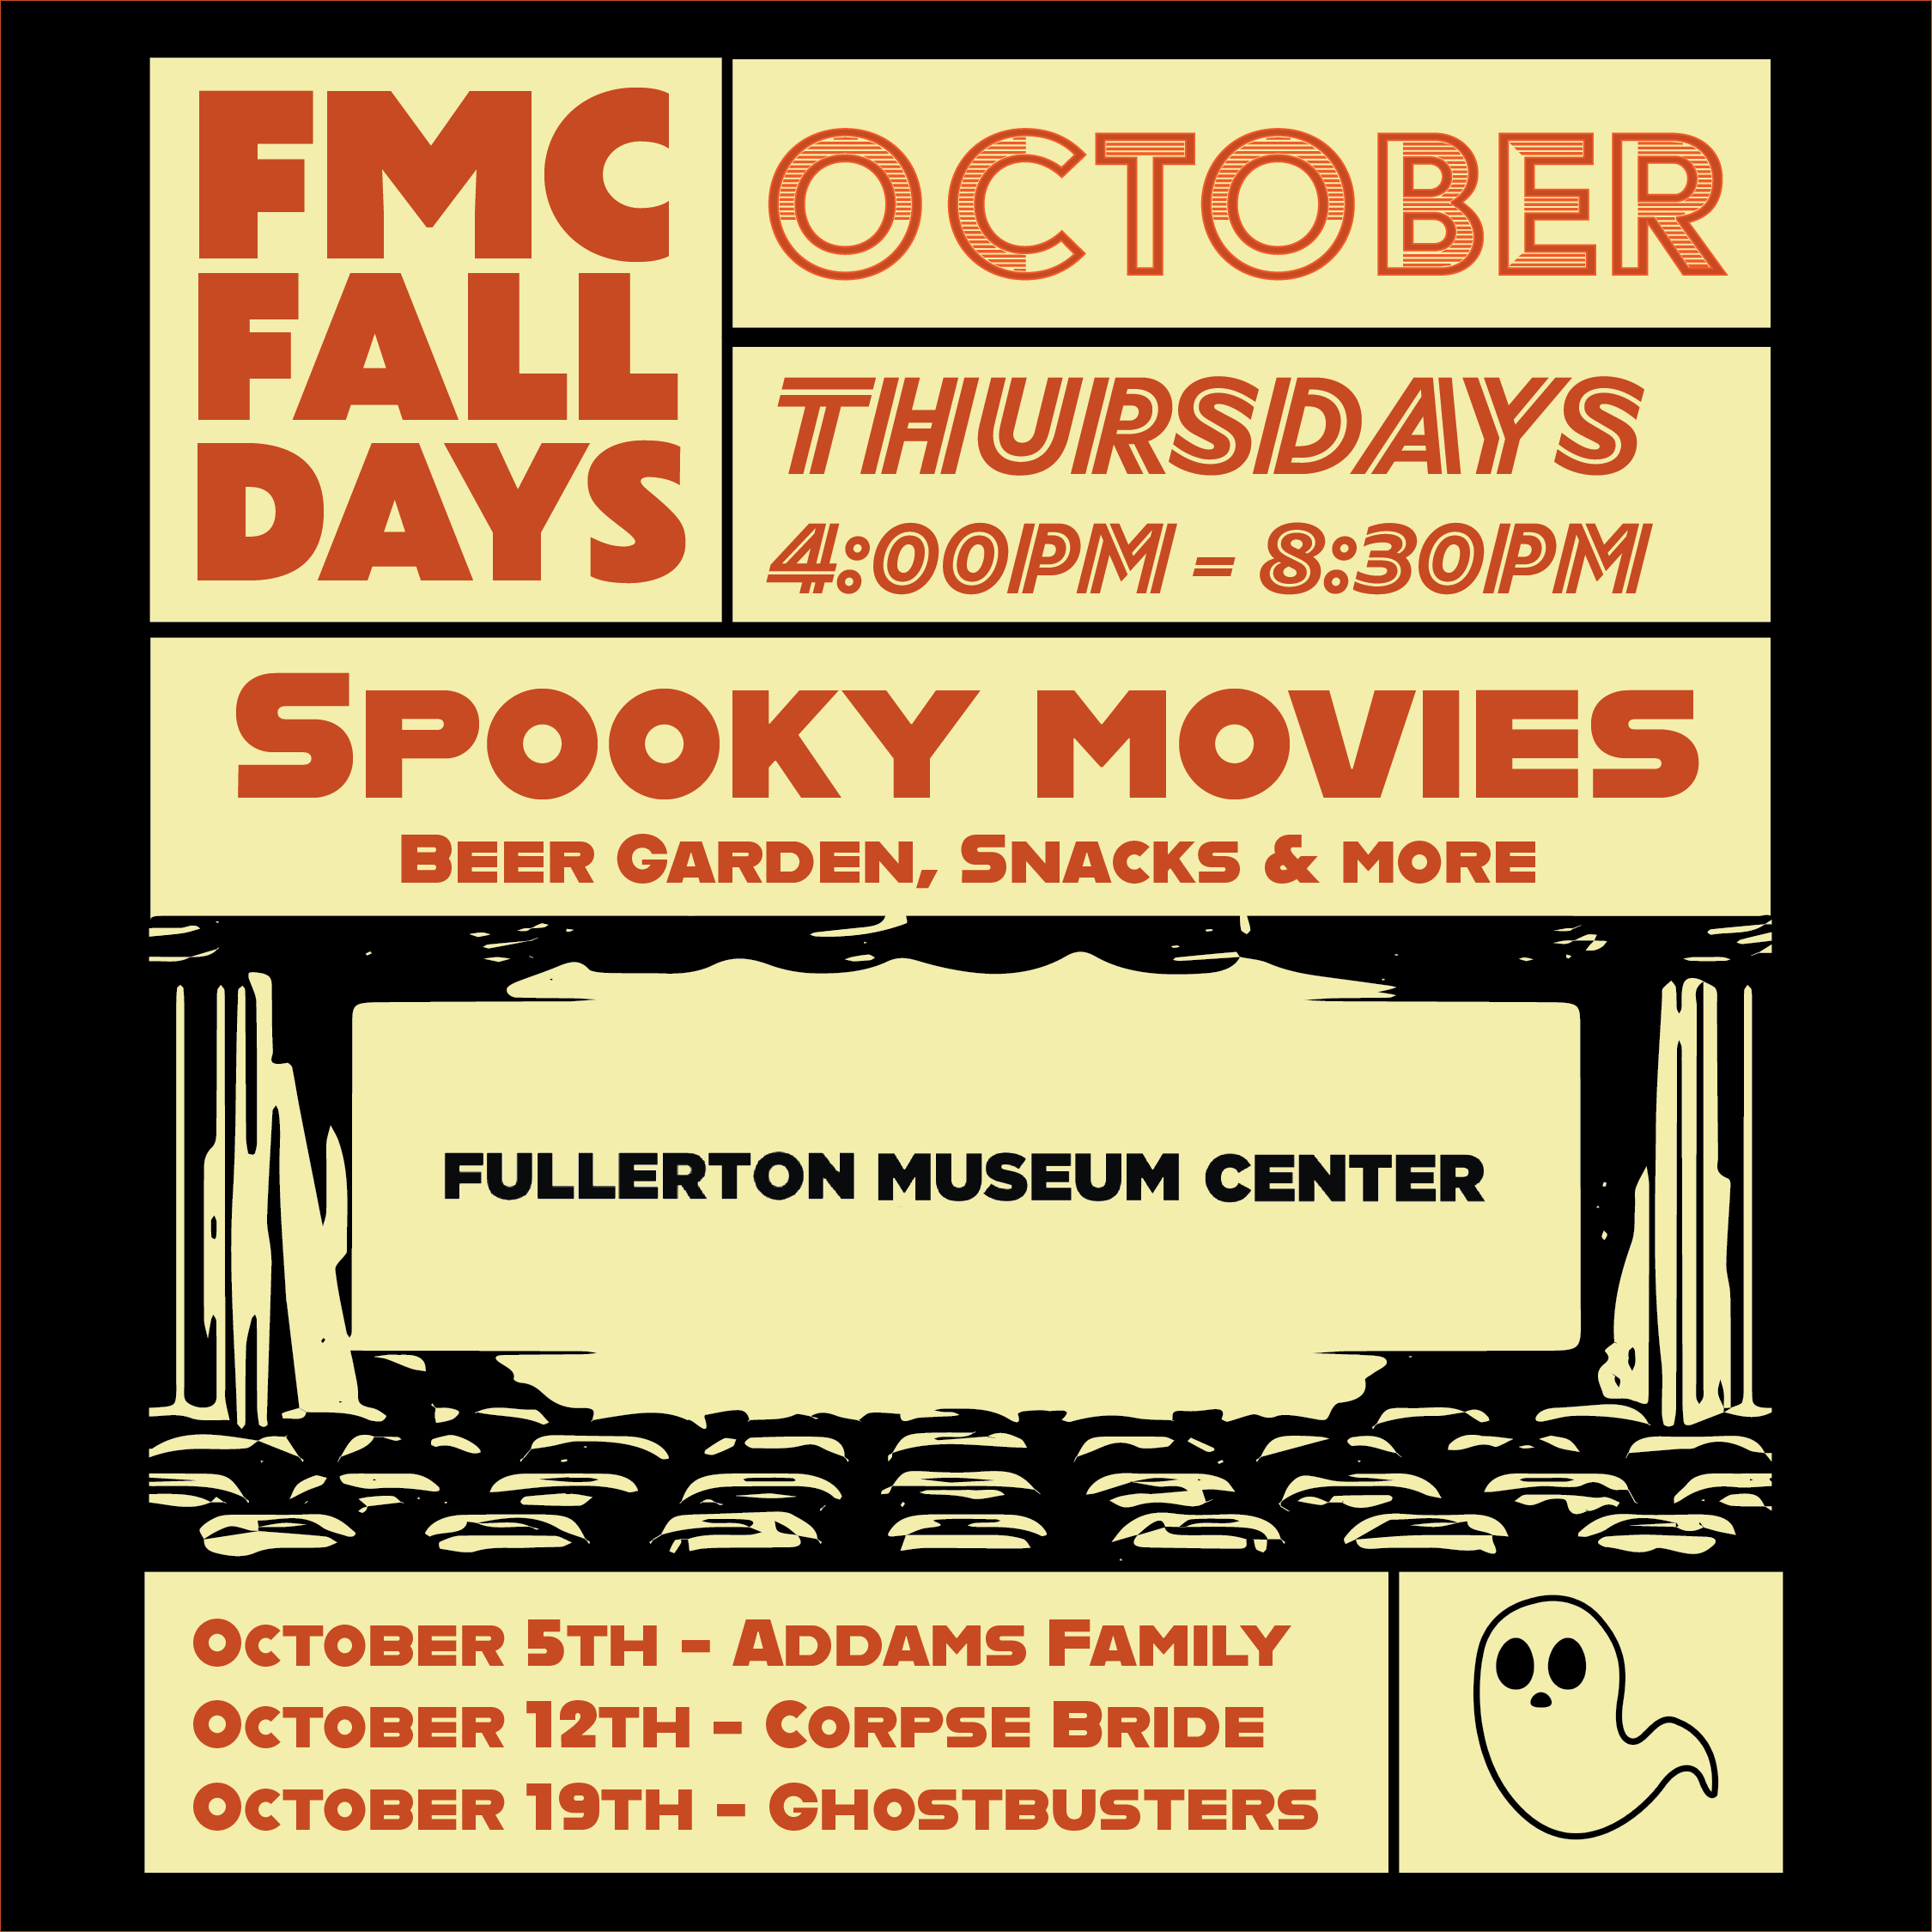 FMC's Fall Days